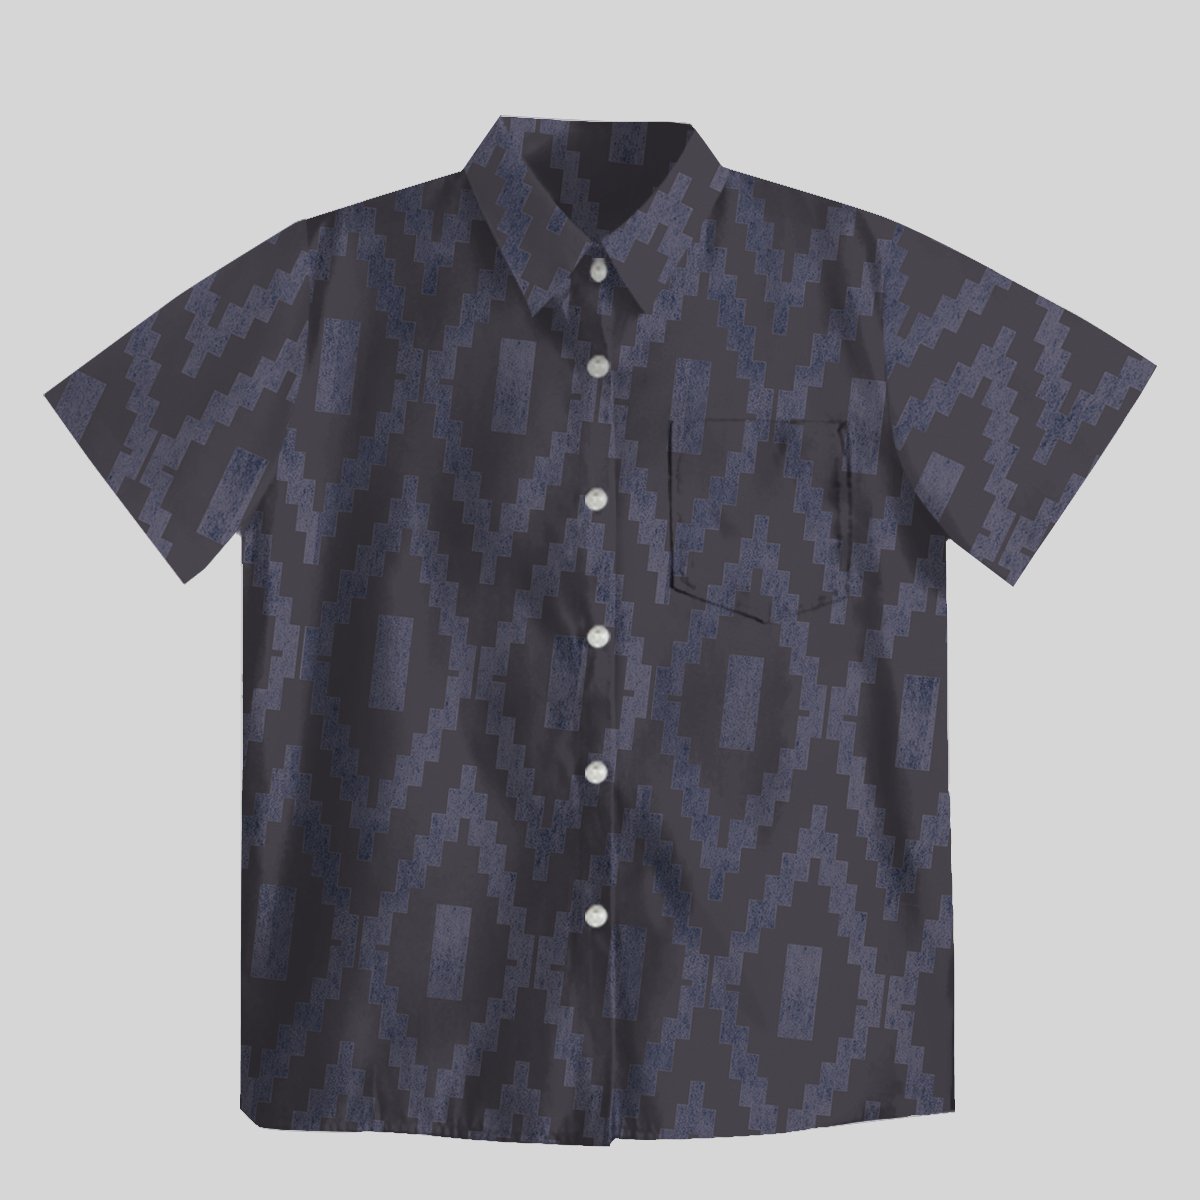 Wooden Style Button Up Pocket Shirt - Geeksoutfit